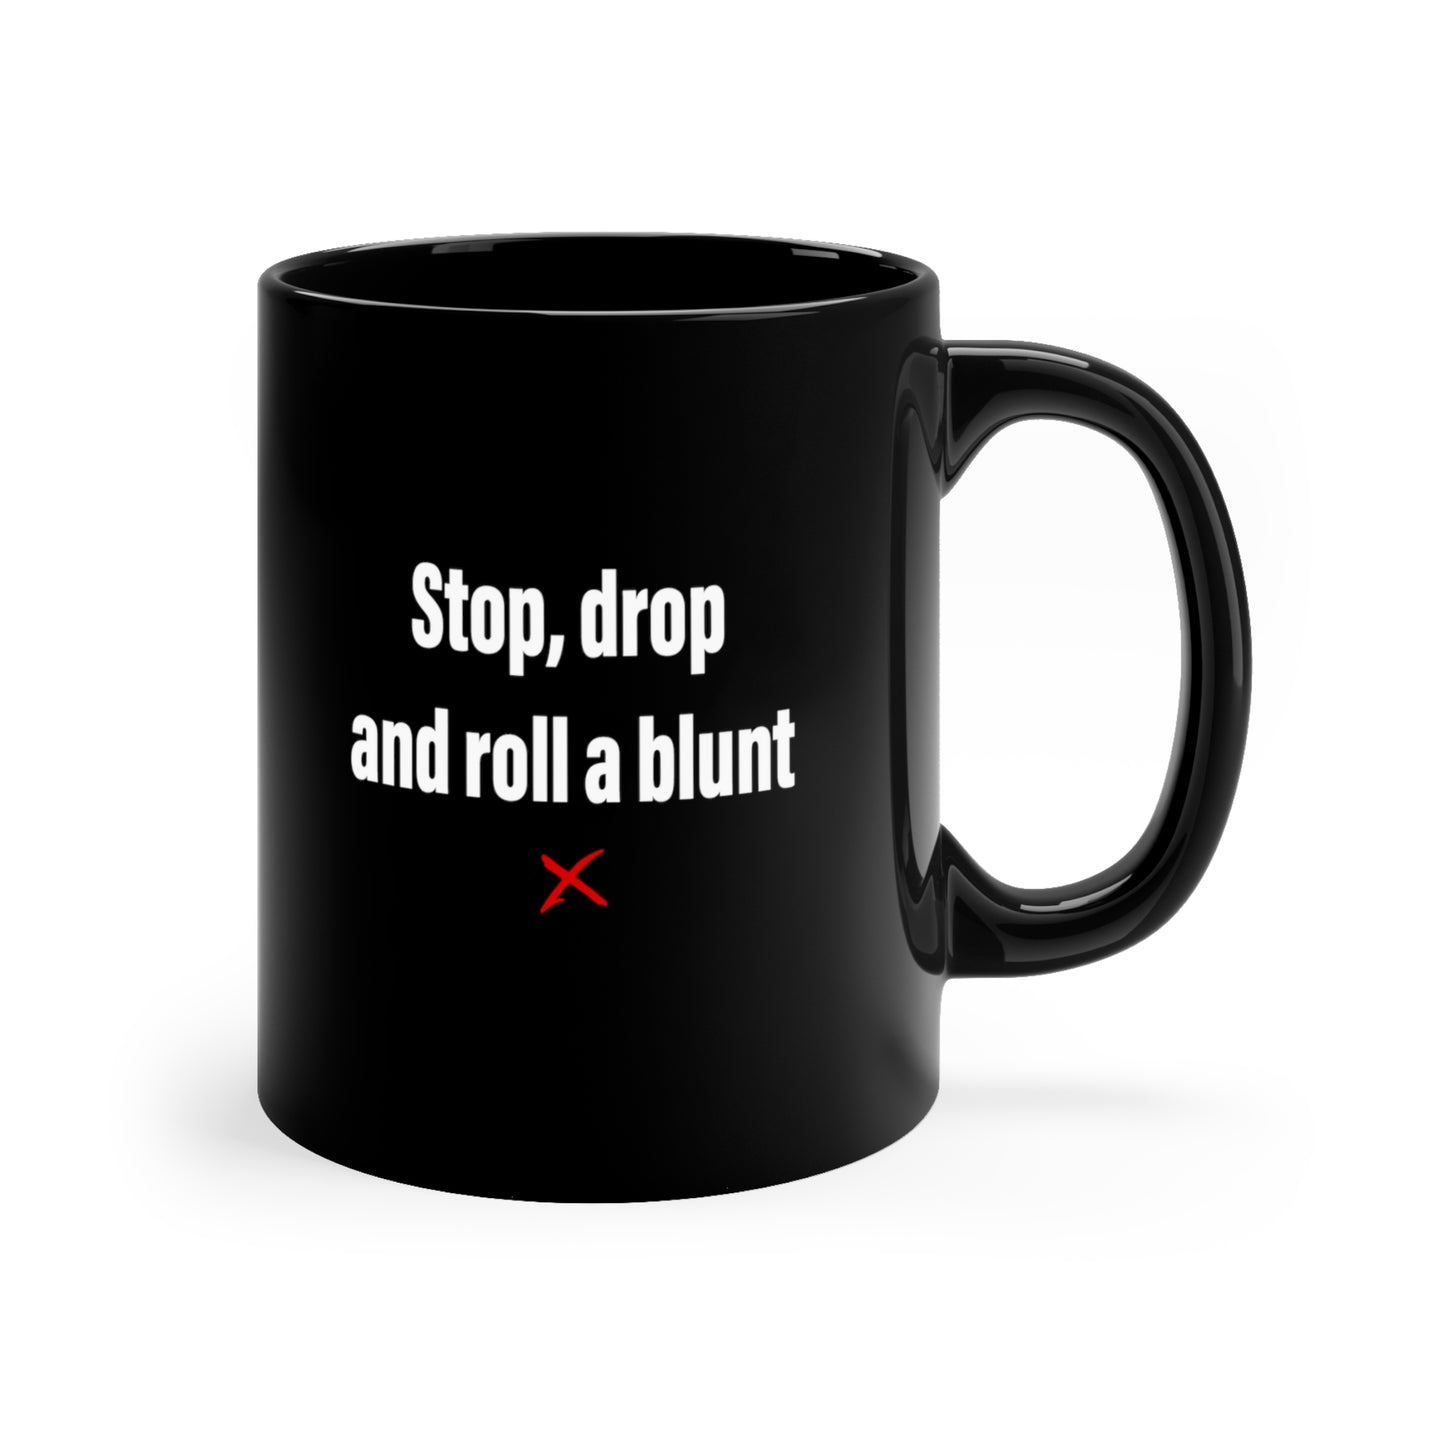 Stop, drop and roll a blunt - Mug